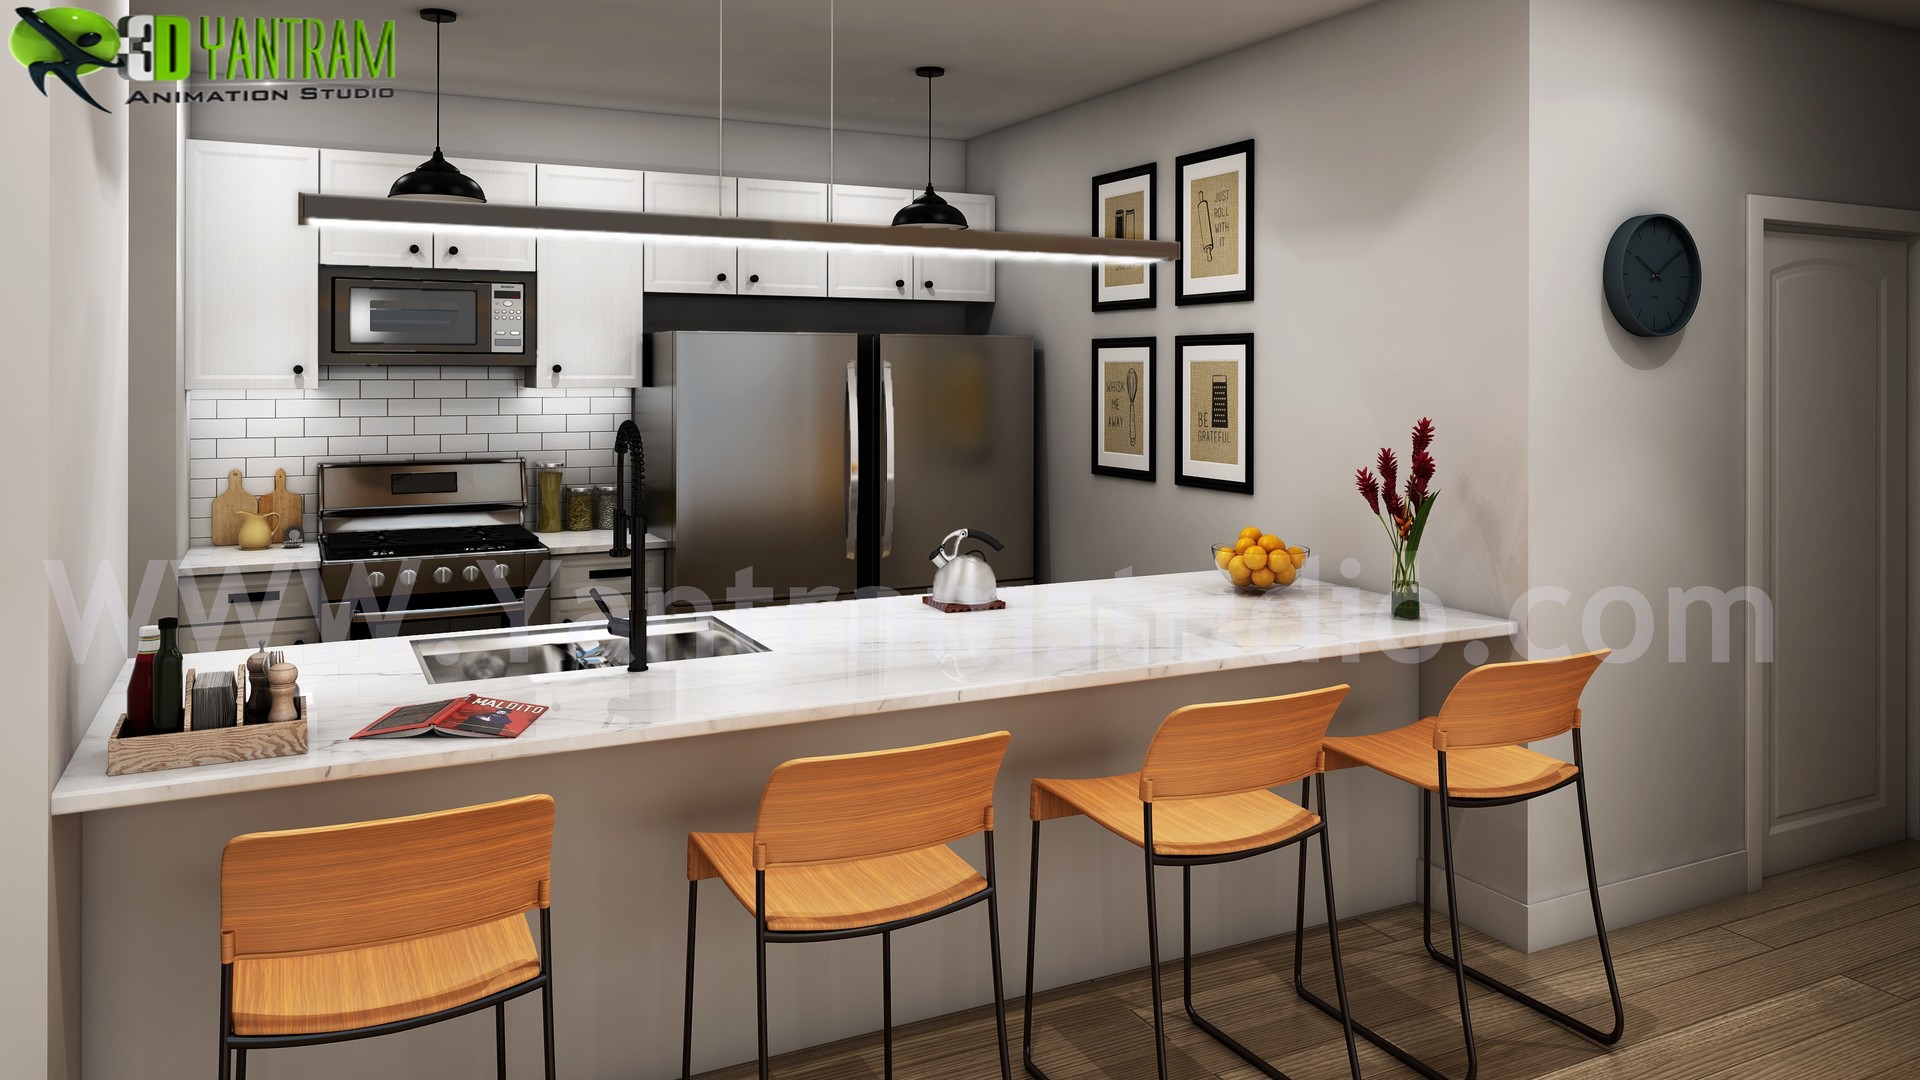 Artstation Modern Small Kitchen Design Ideas By Yantram 3d